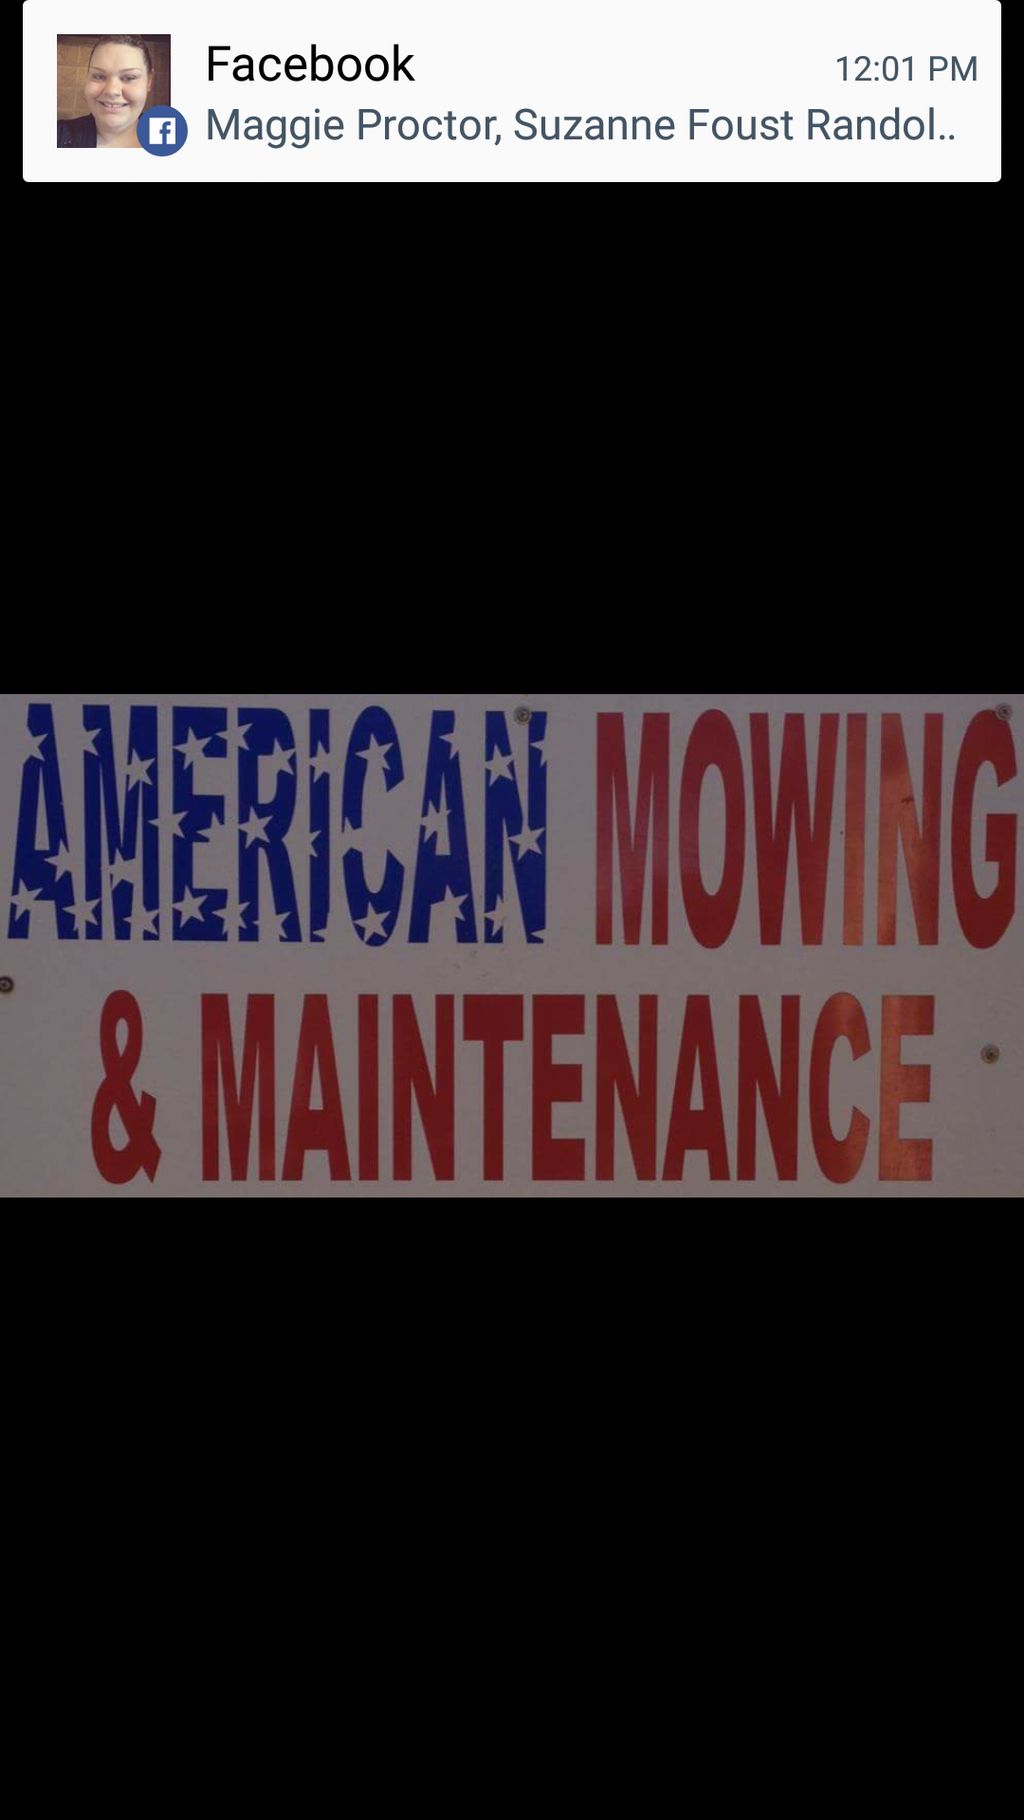 American Mowing & Maintenance